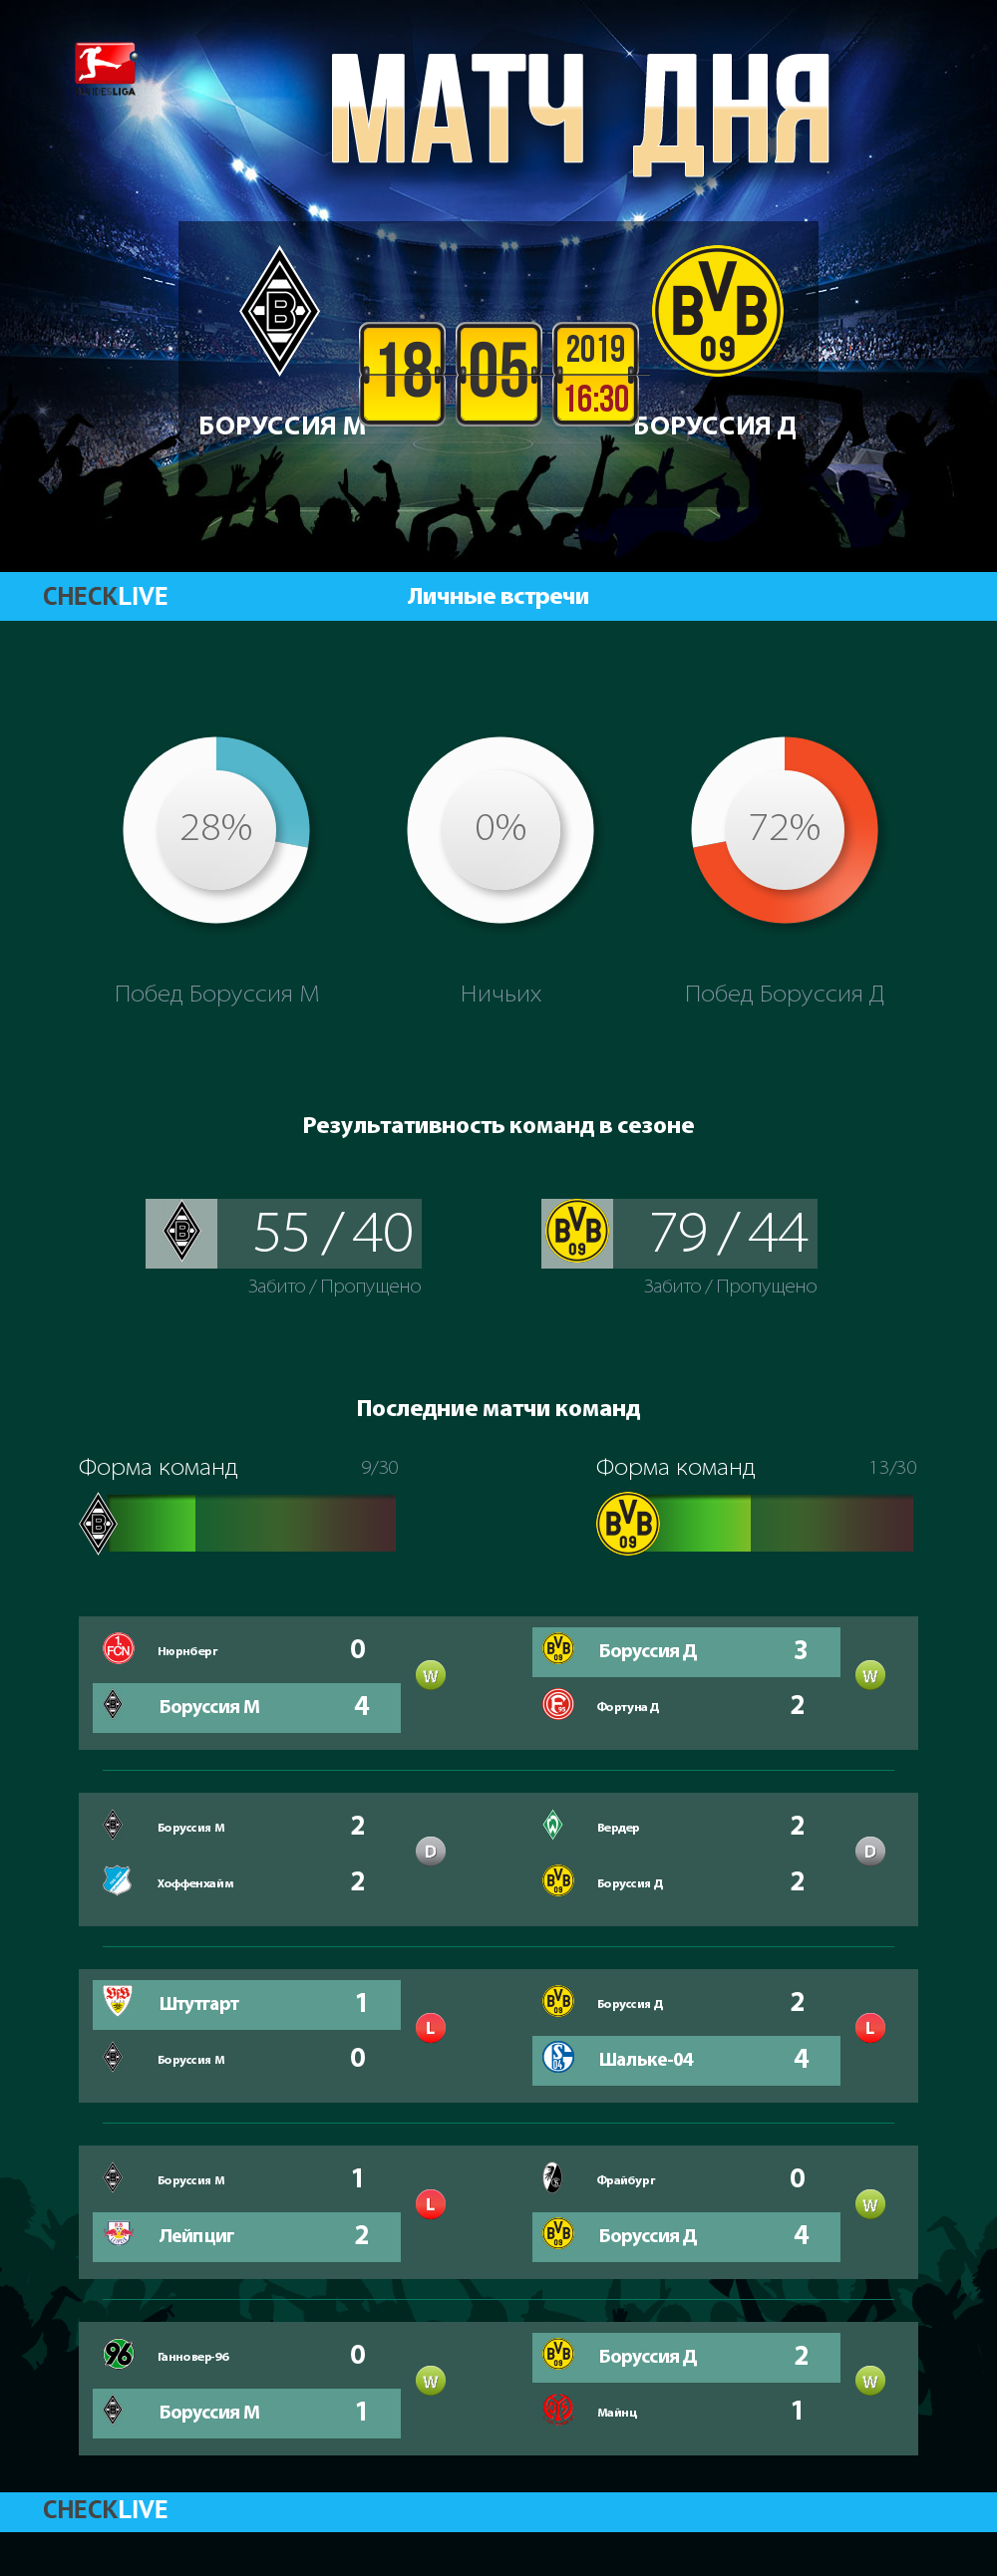 Инфографика Боруссия М и Боруссия Д матч дня 18.05.2019